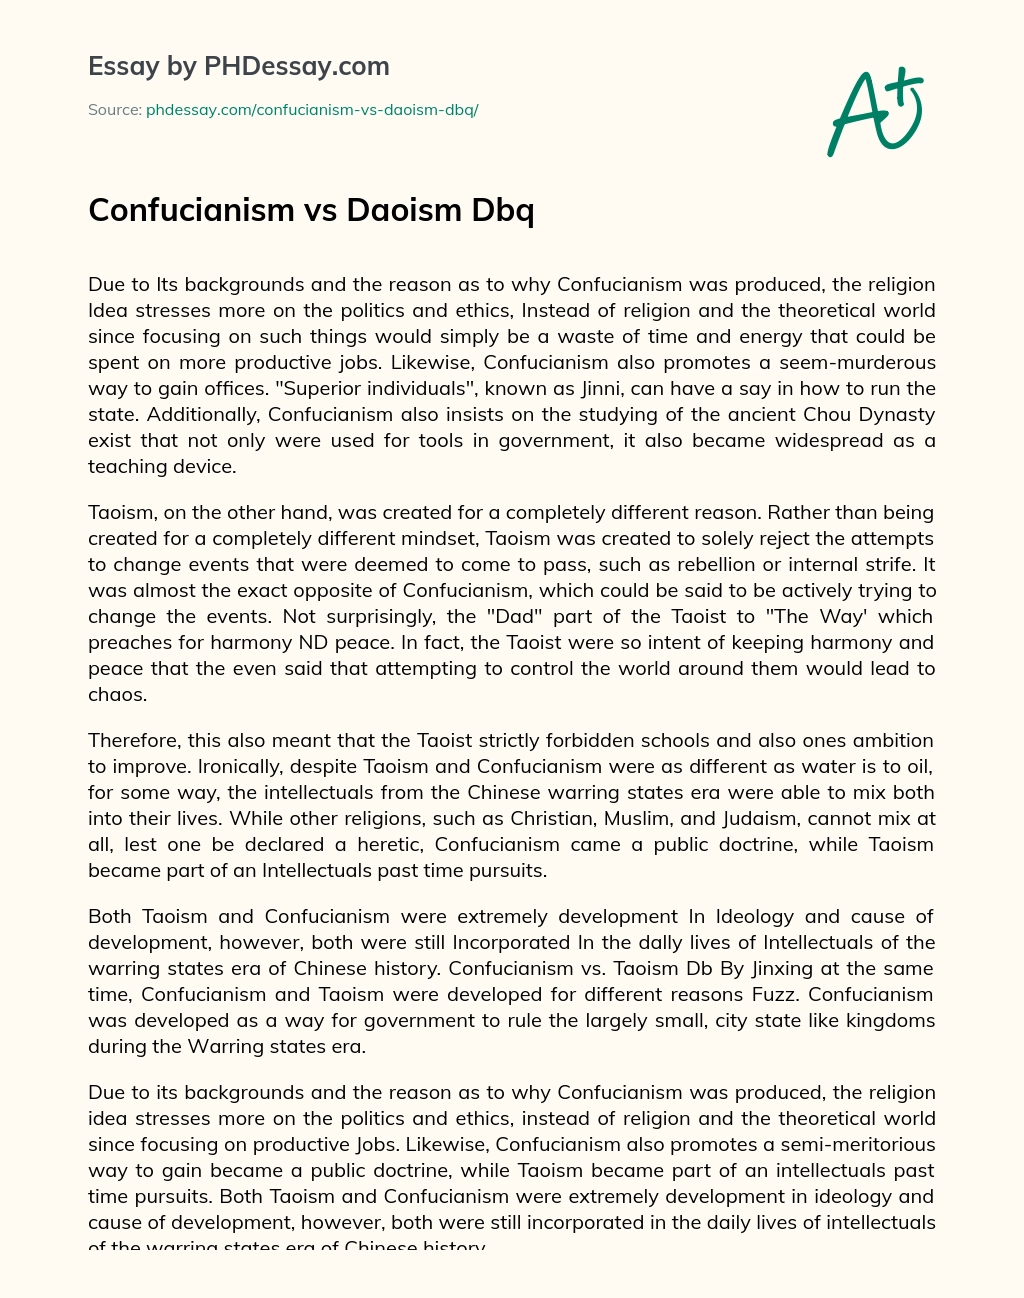 Confucianism vs Daoism Dbq essay